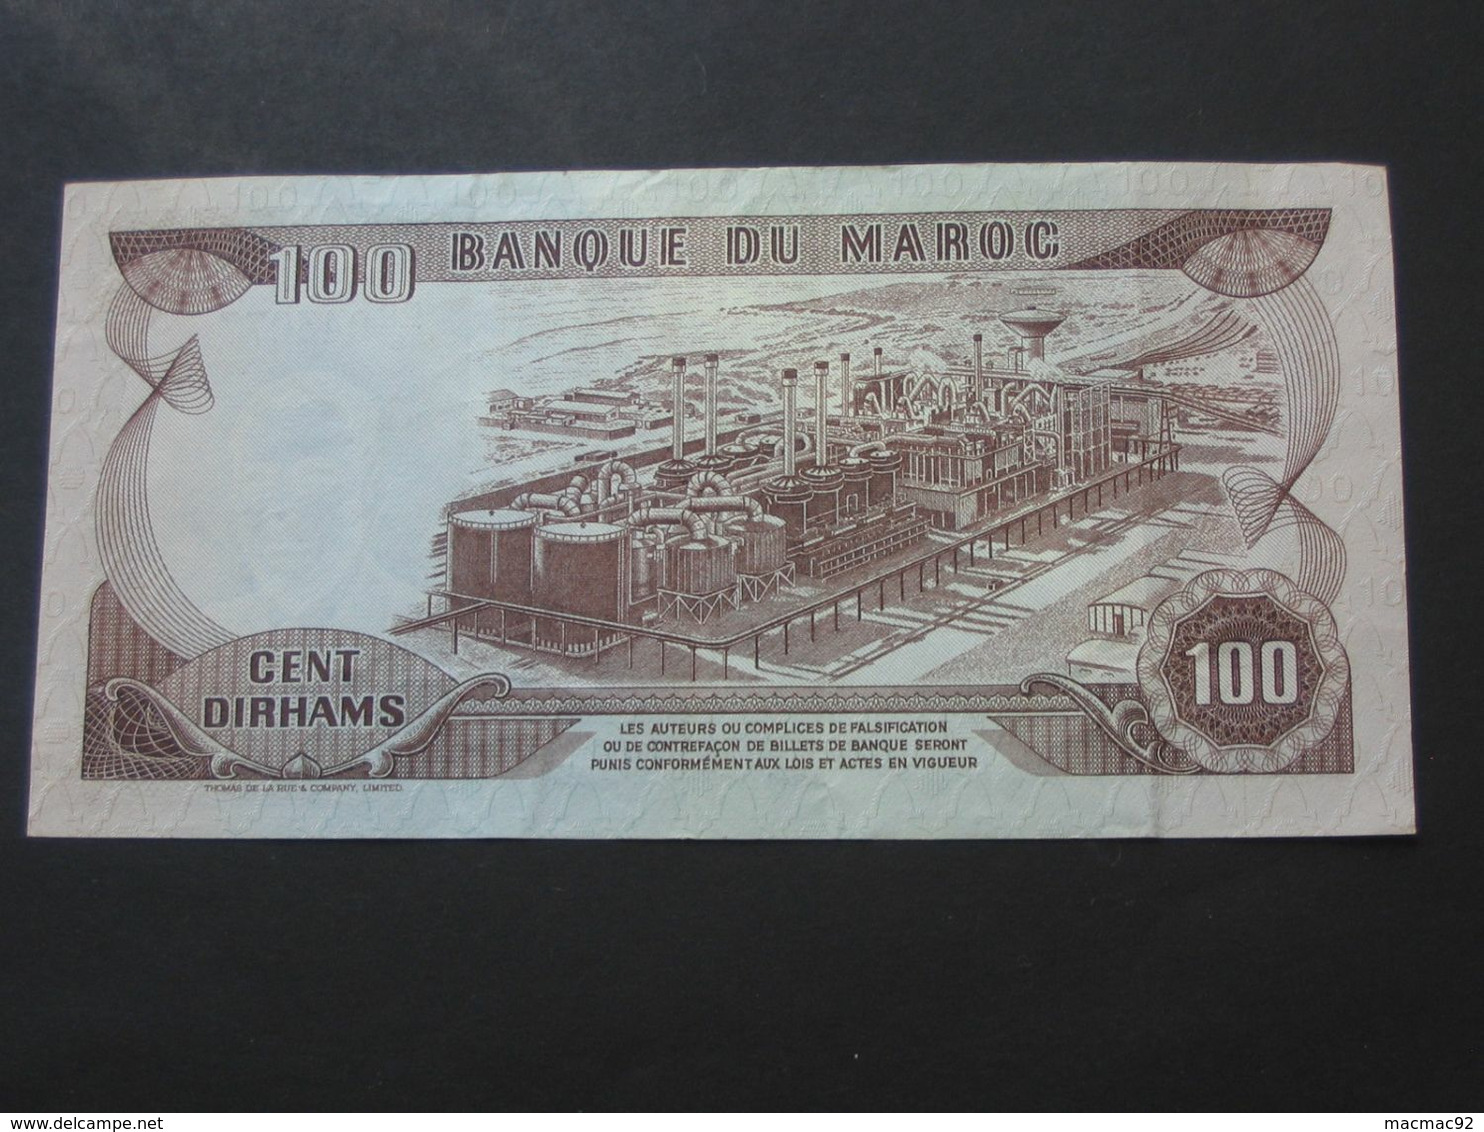 100 Dirhams 1970-1390 Maroc - Banque Du Maroc   **** EN ACHAT IMMEDIAT **** - Marokko